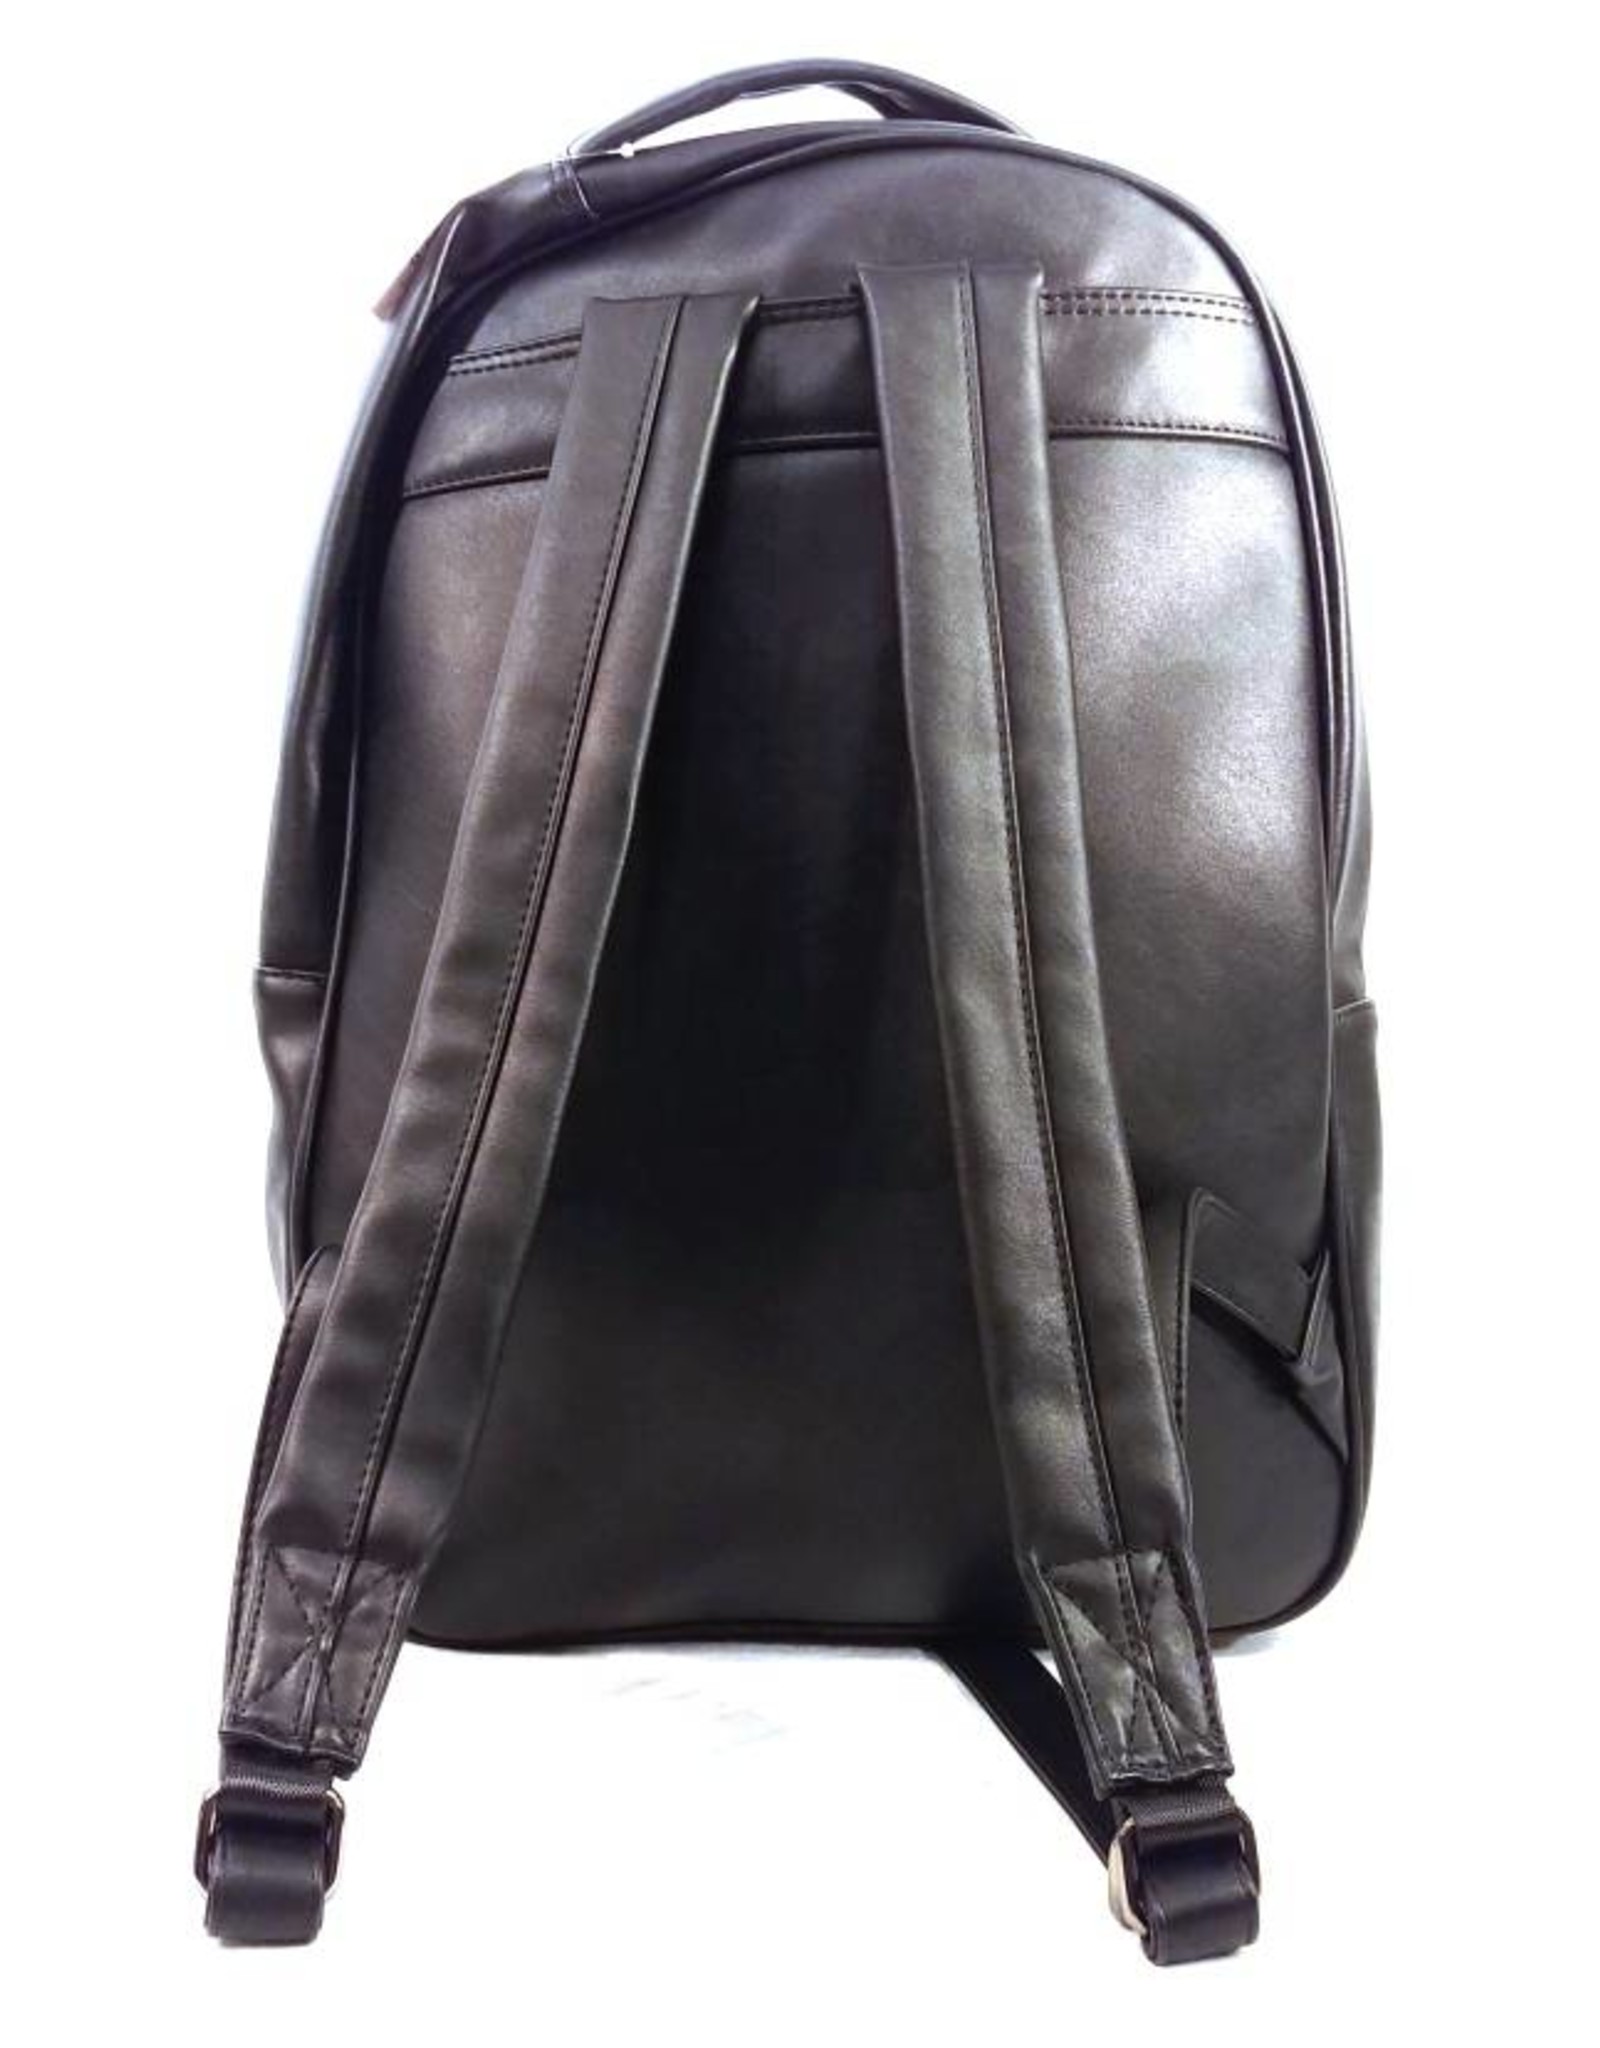 Dark Desire Gothic bags Steampunk bags - Gothic 3D Backpack Bulldog silver